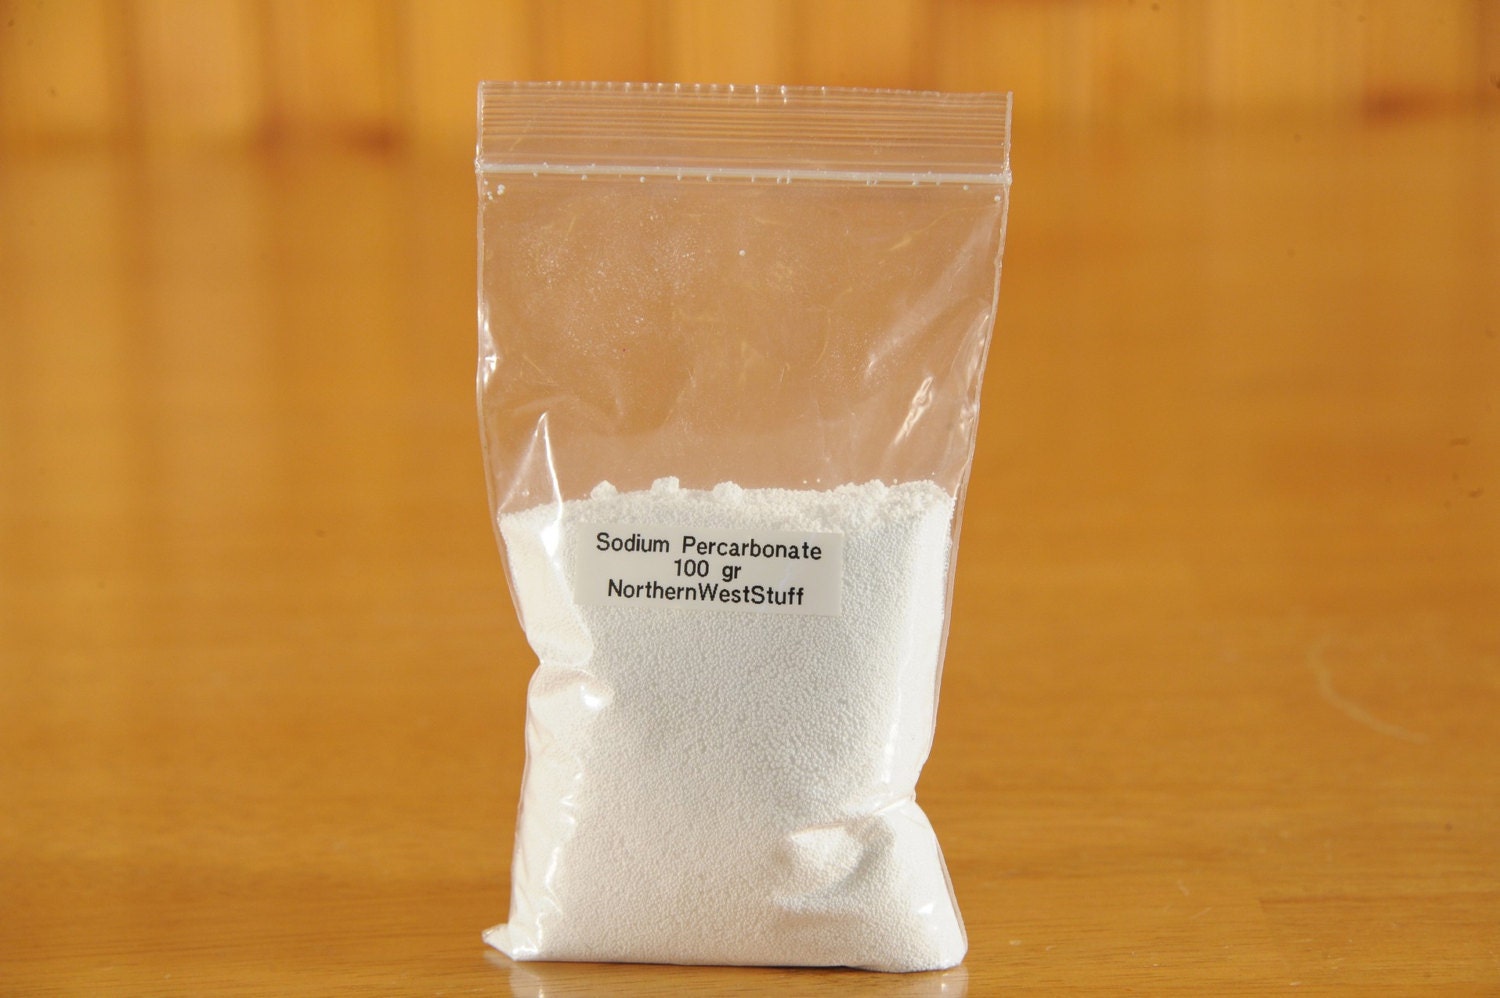 Sodium percarbonate - Wikipedia